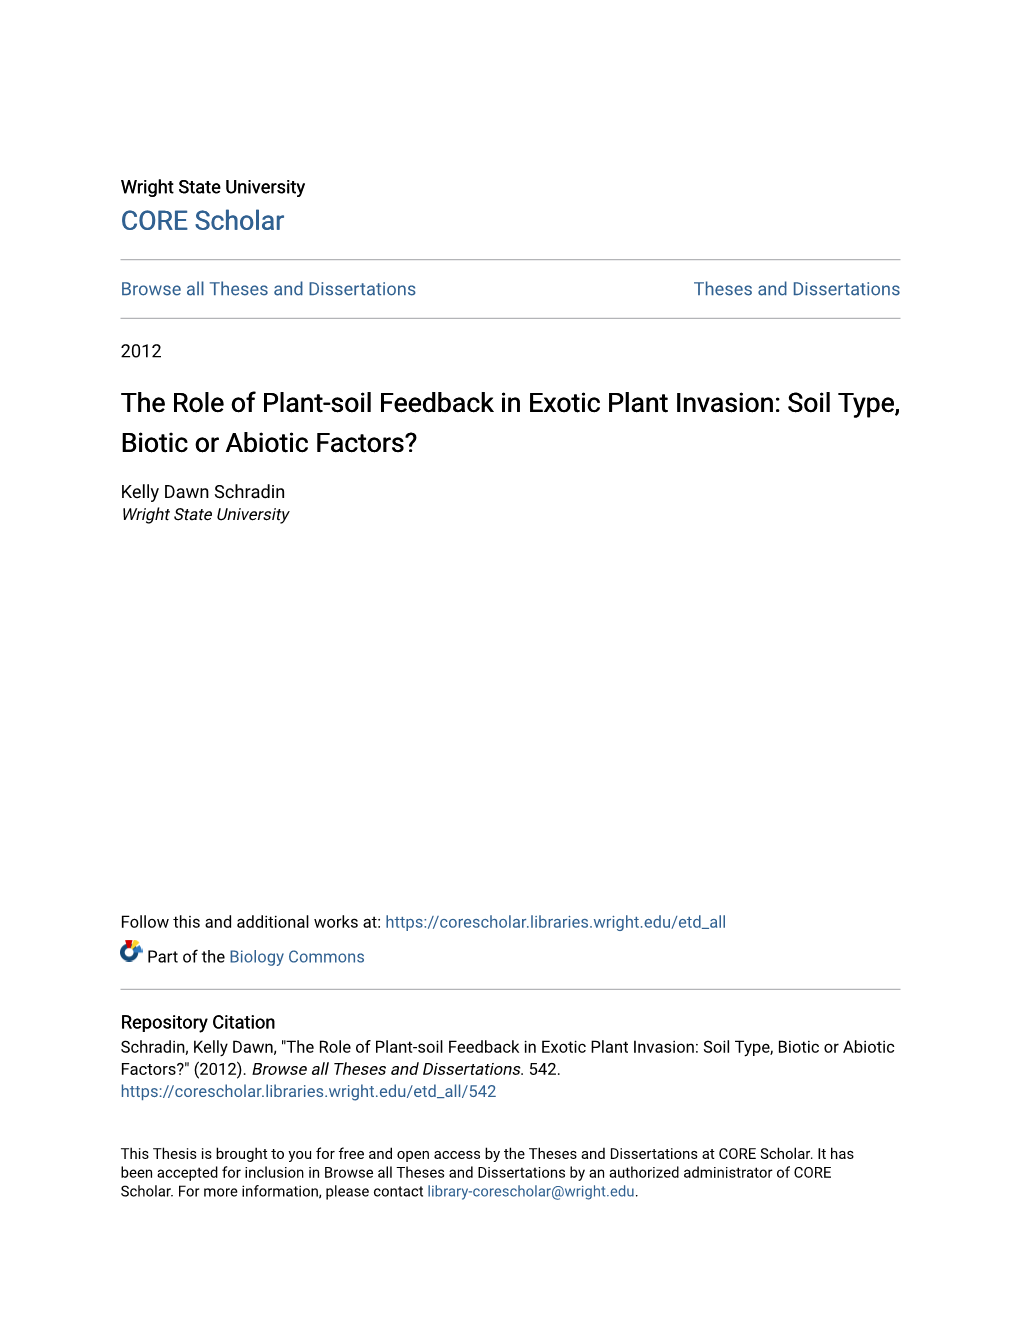 Soil Type, Biotic Or Abiotic Factors?